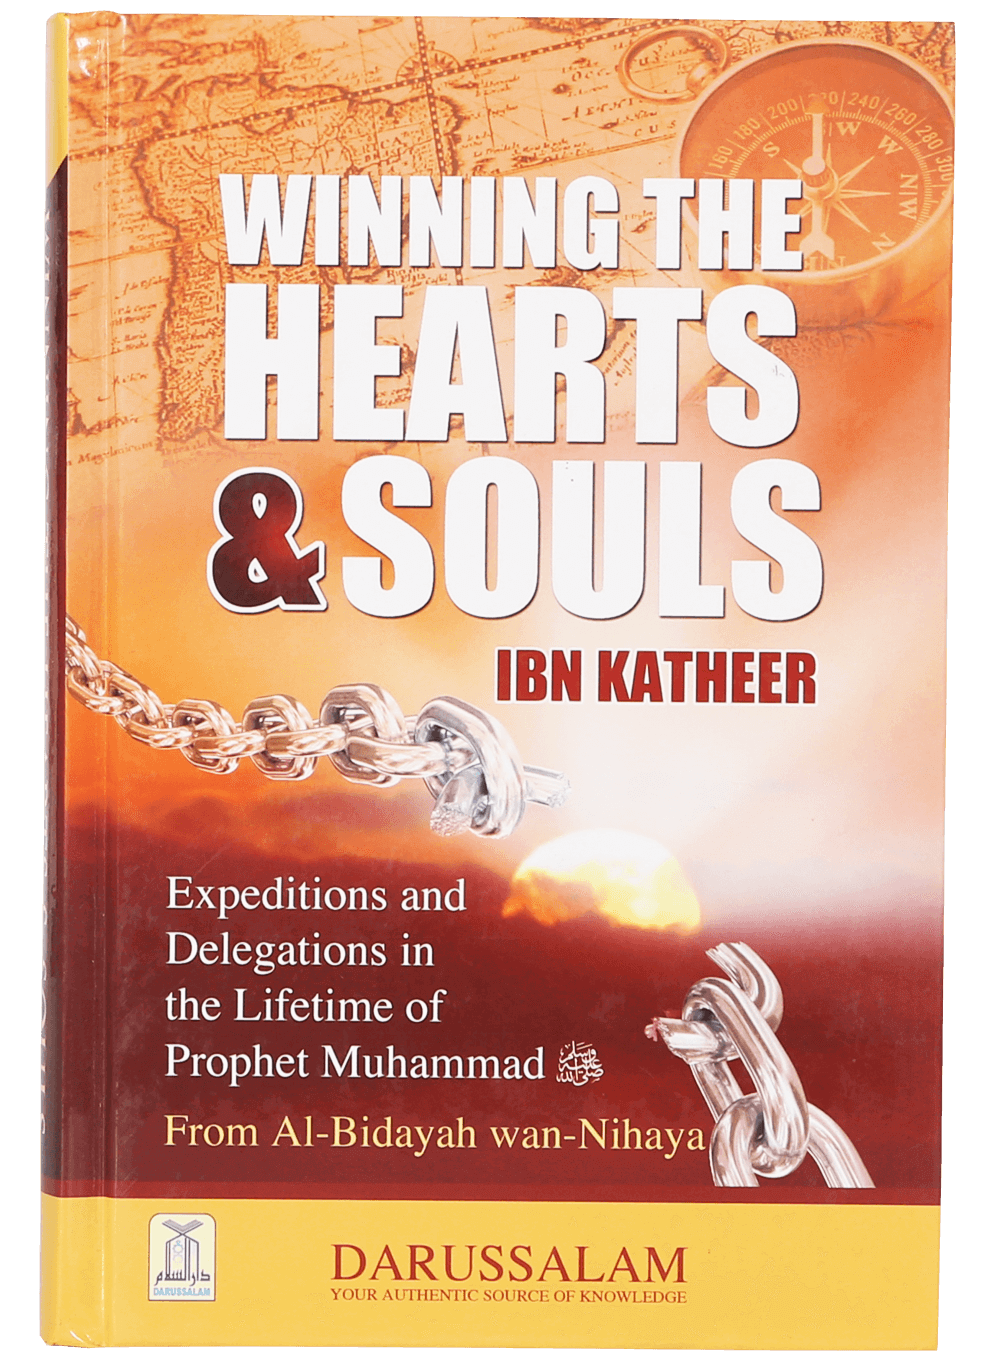 Winning The Heart And Souls (Al-Bidayah wan Nihayah): Expeditions from the Life of Prophet Muhammad ﷺ